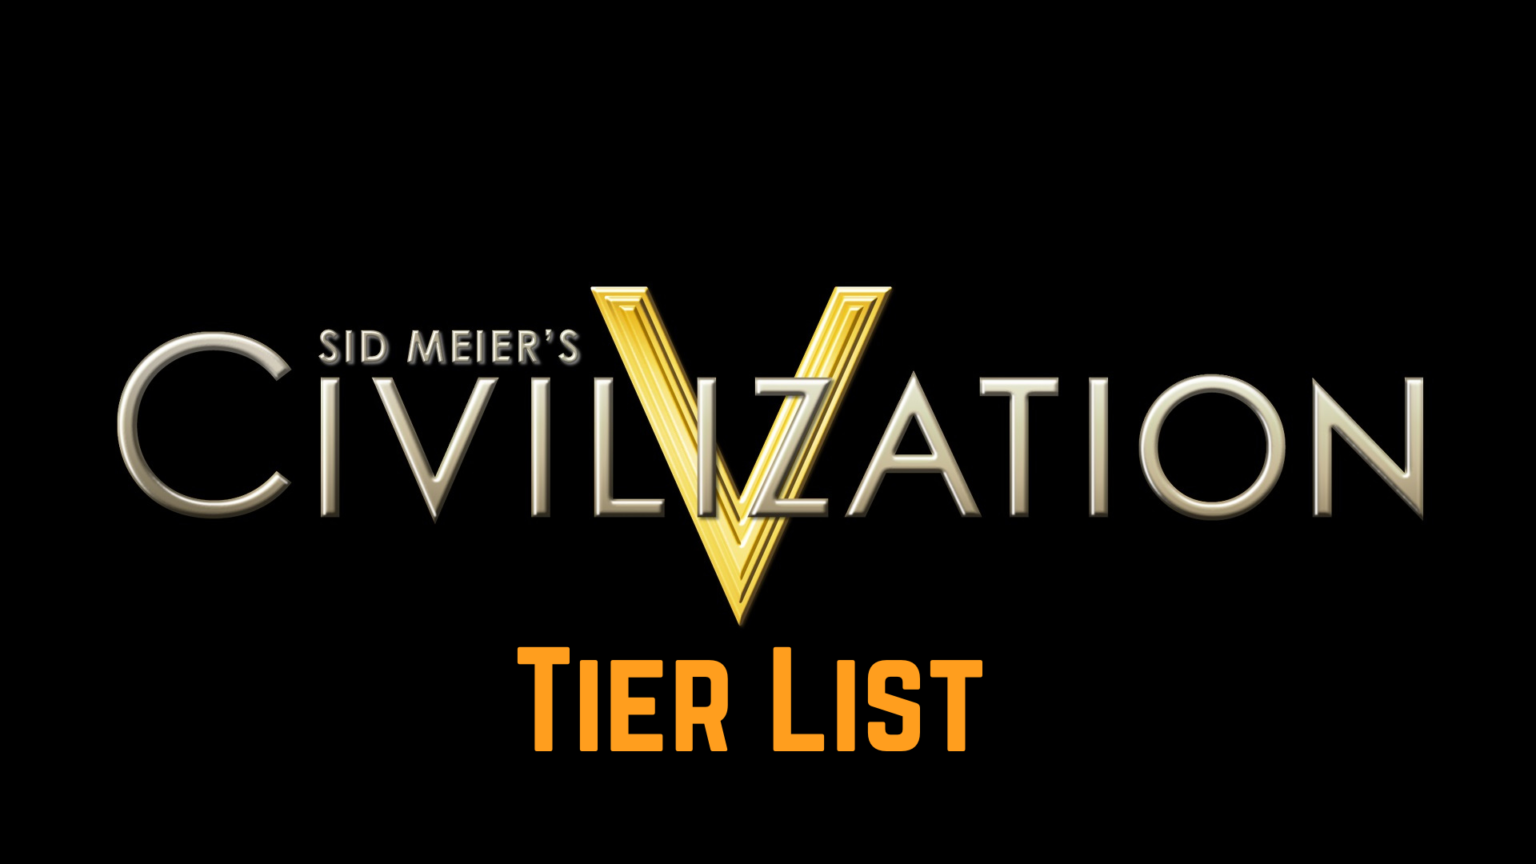 civilization 6 tier list 2021